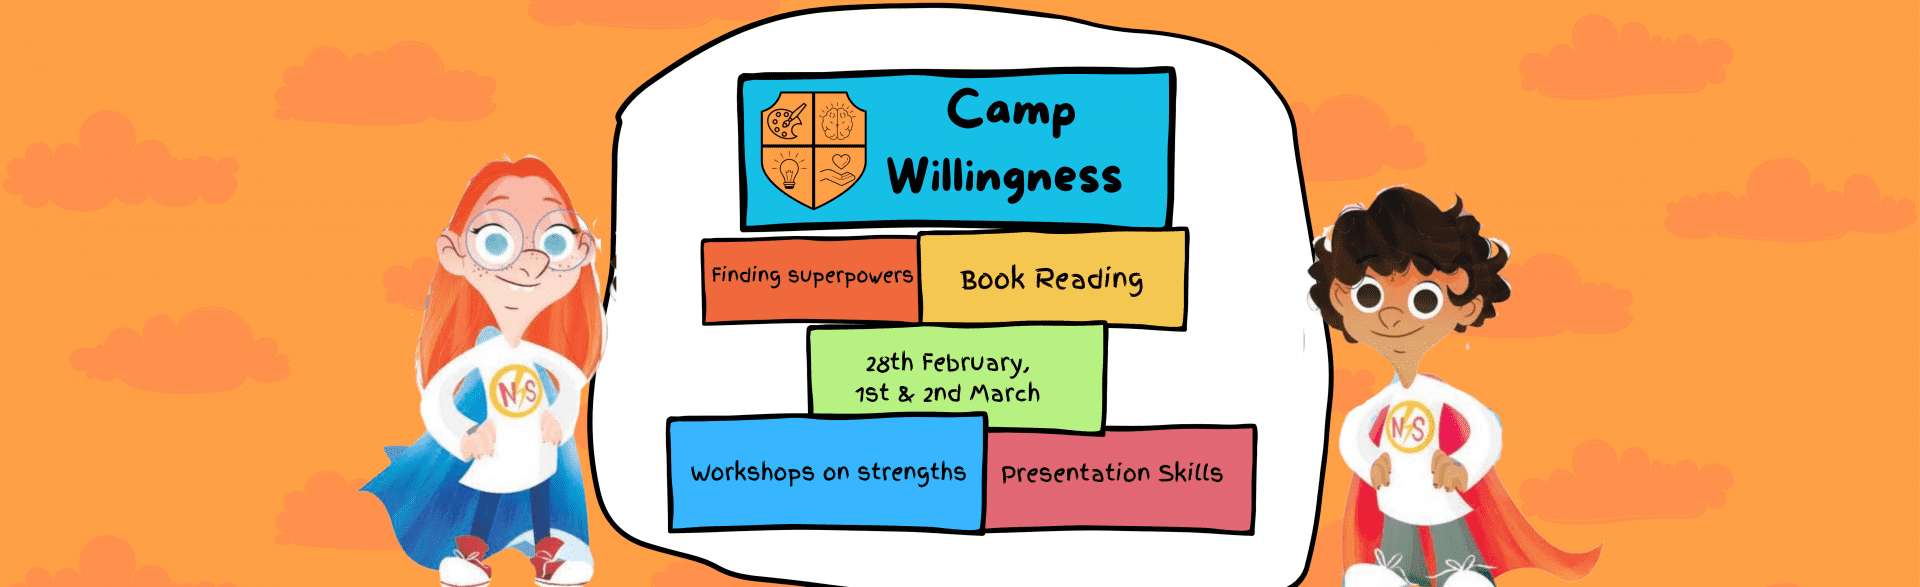 Willingness|Super Camp Willingness